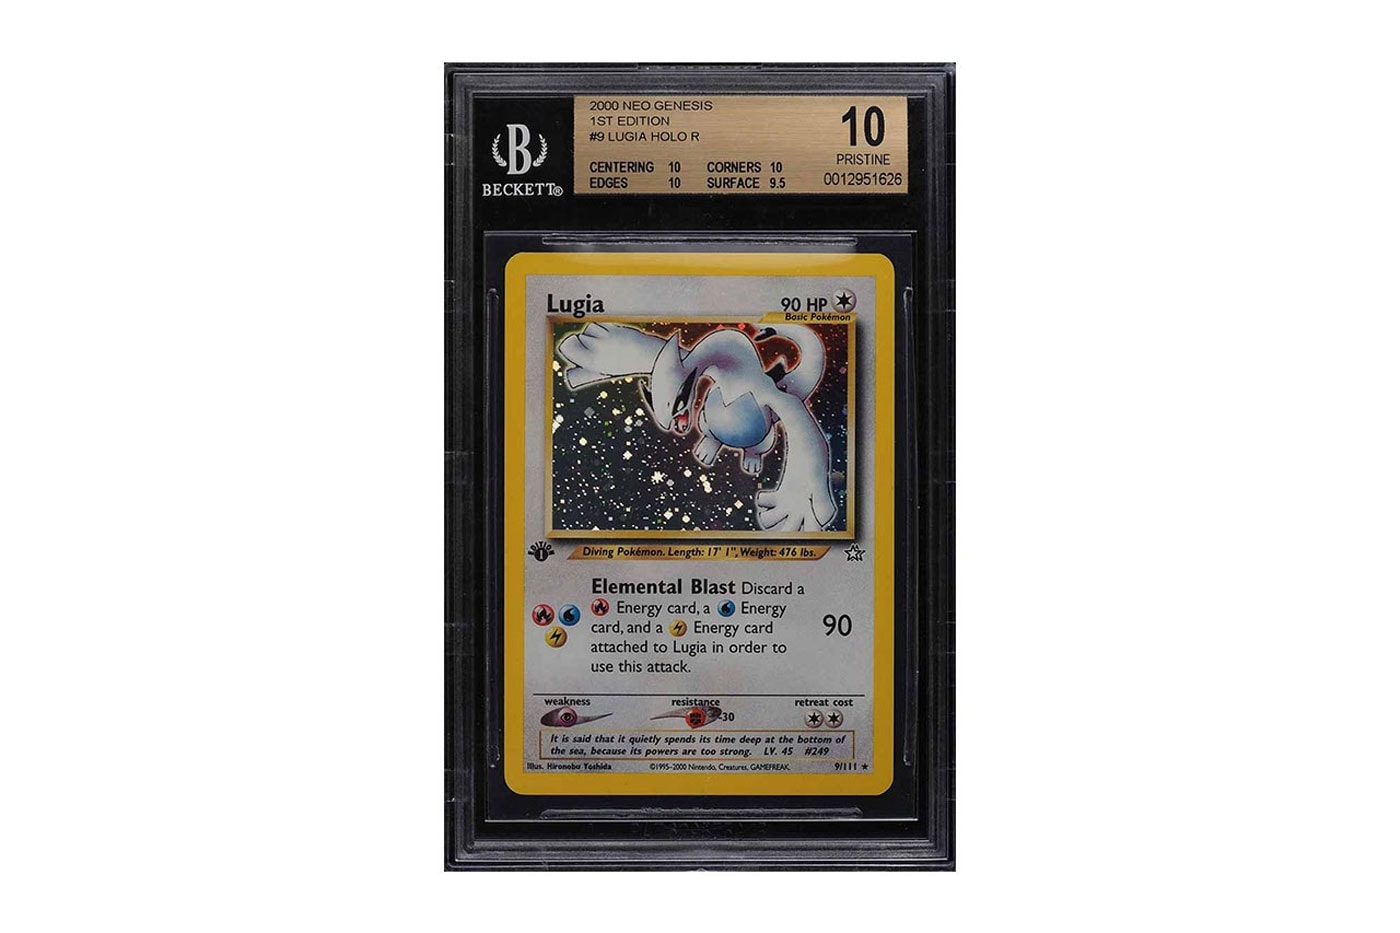 Pokémon Trading Cards